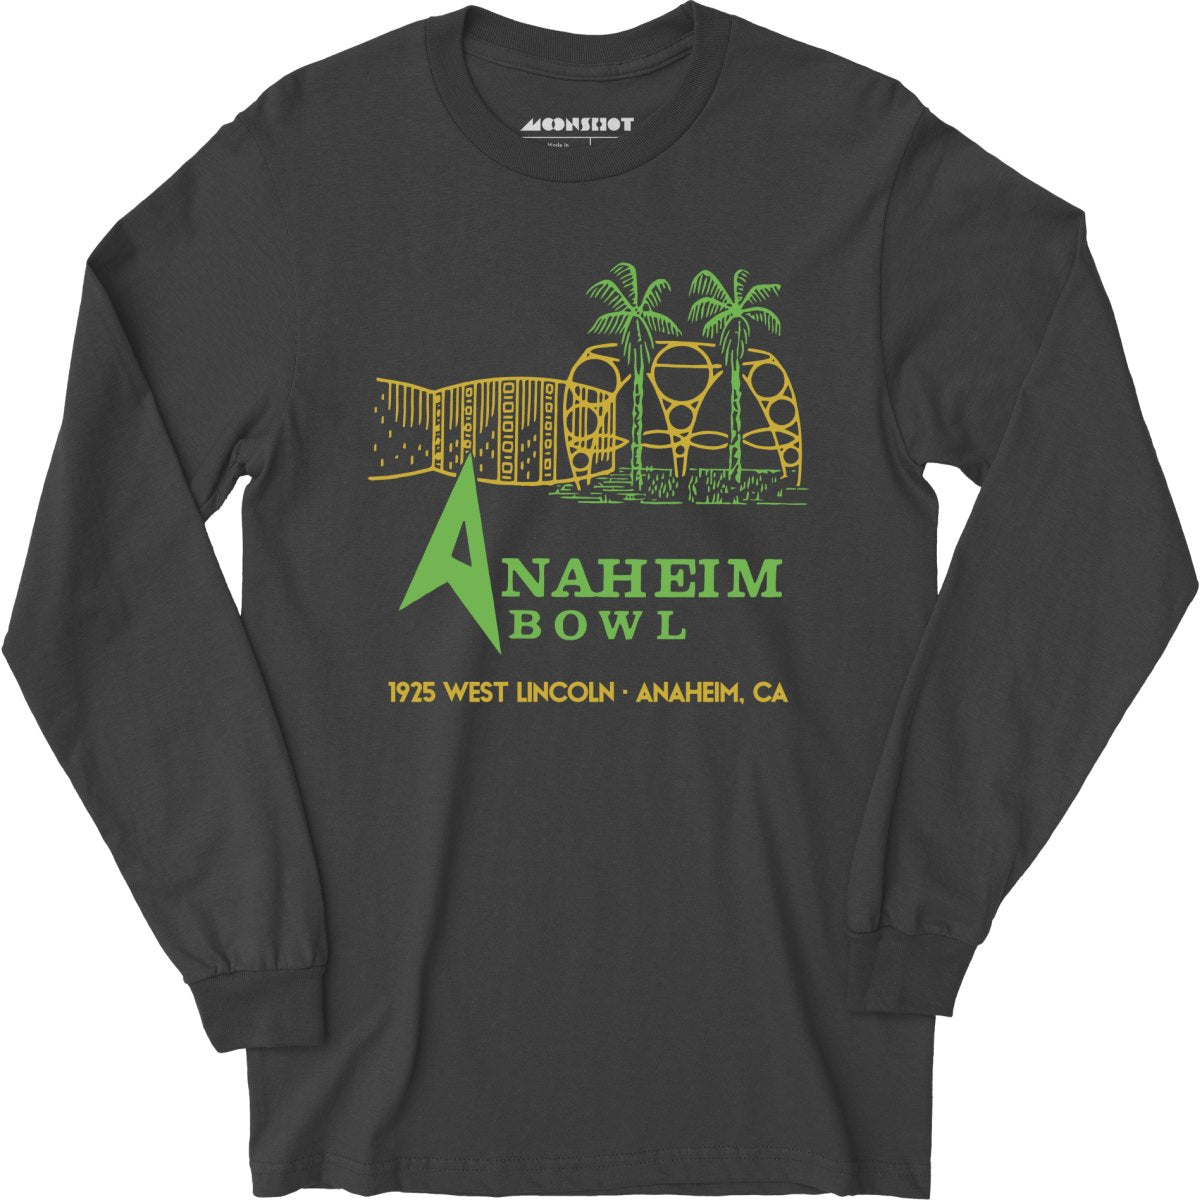 Anaheim Bowl - Anaheim, CA - Vintage Bowling Alley - Long Sleeve T-Shirt